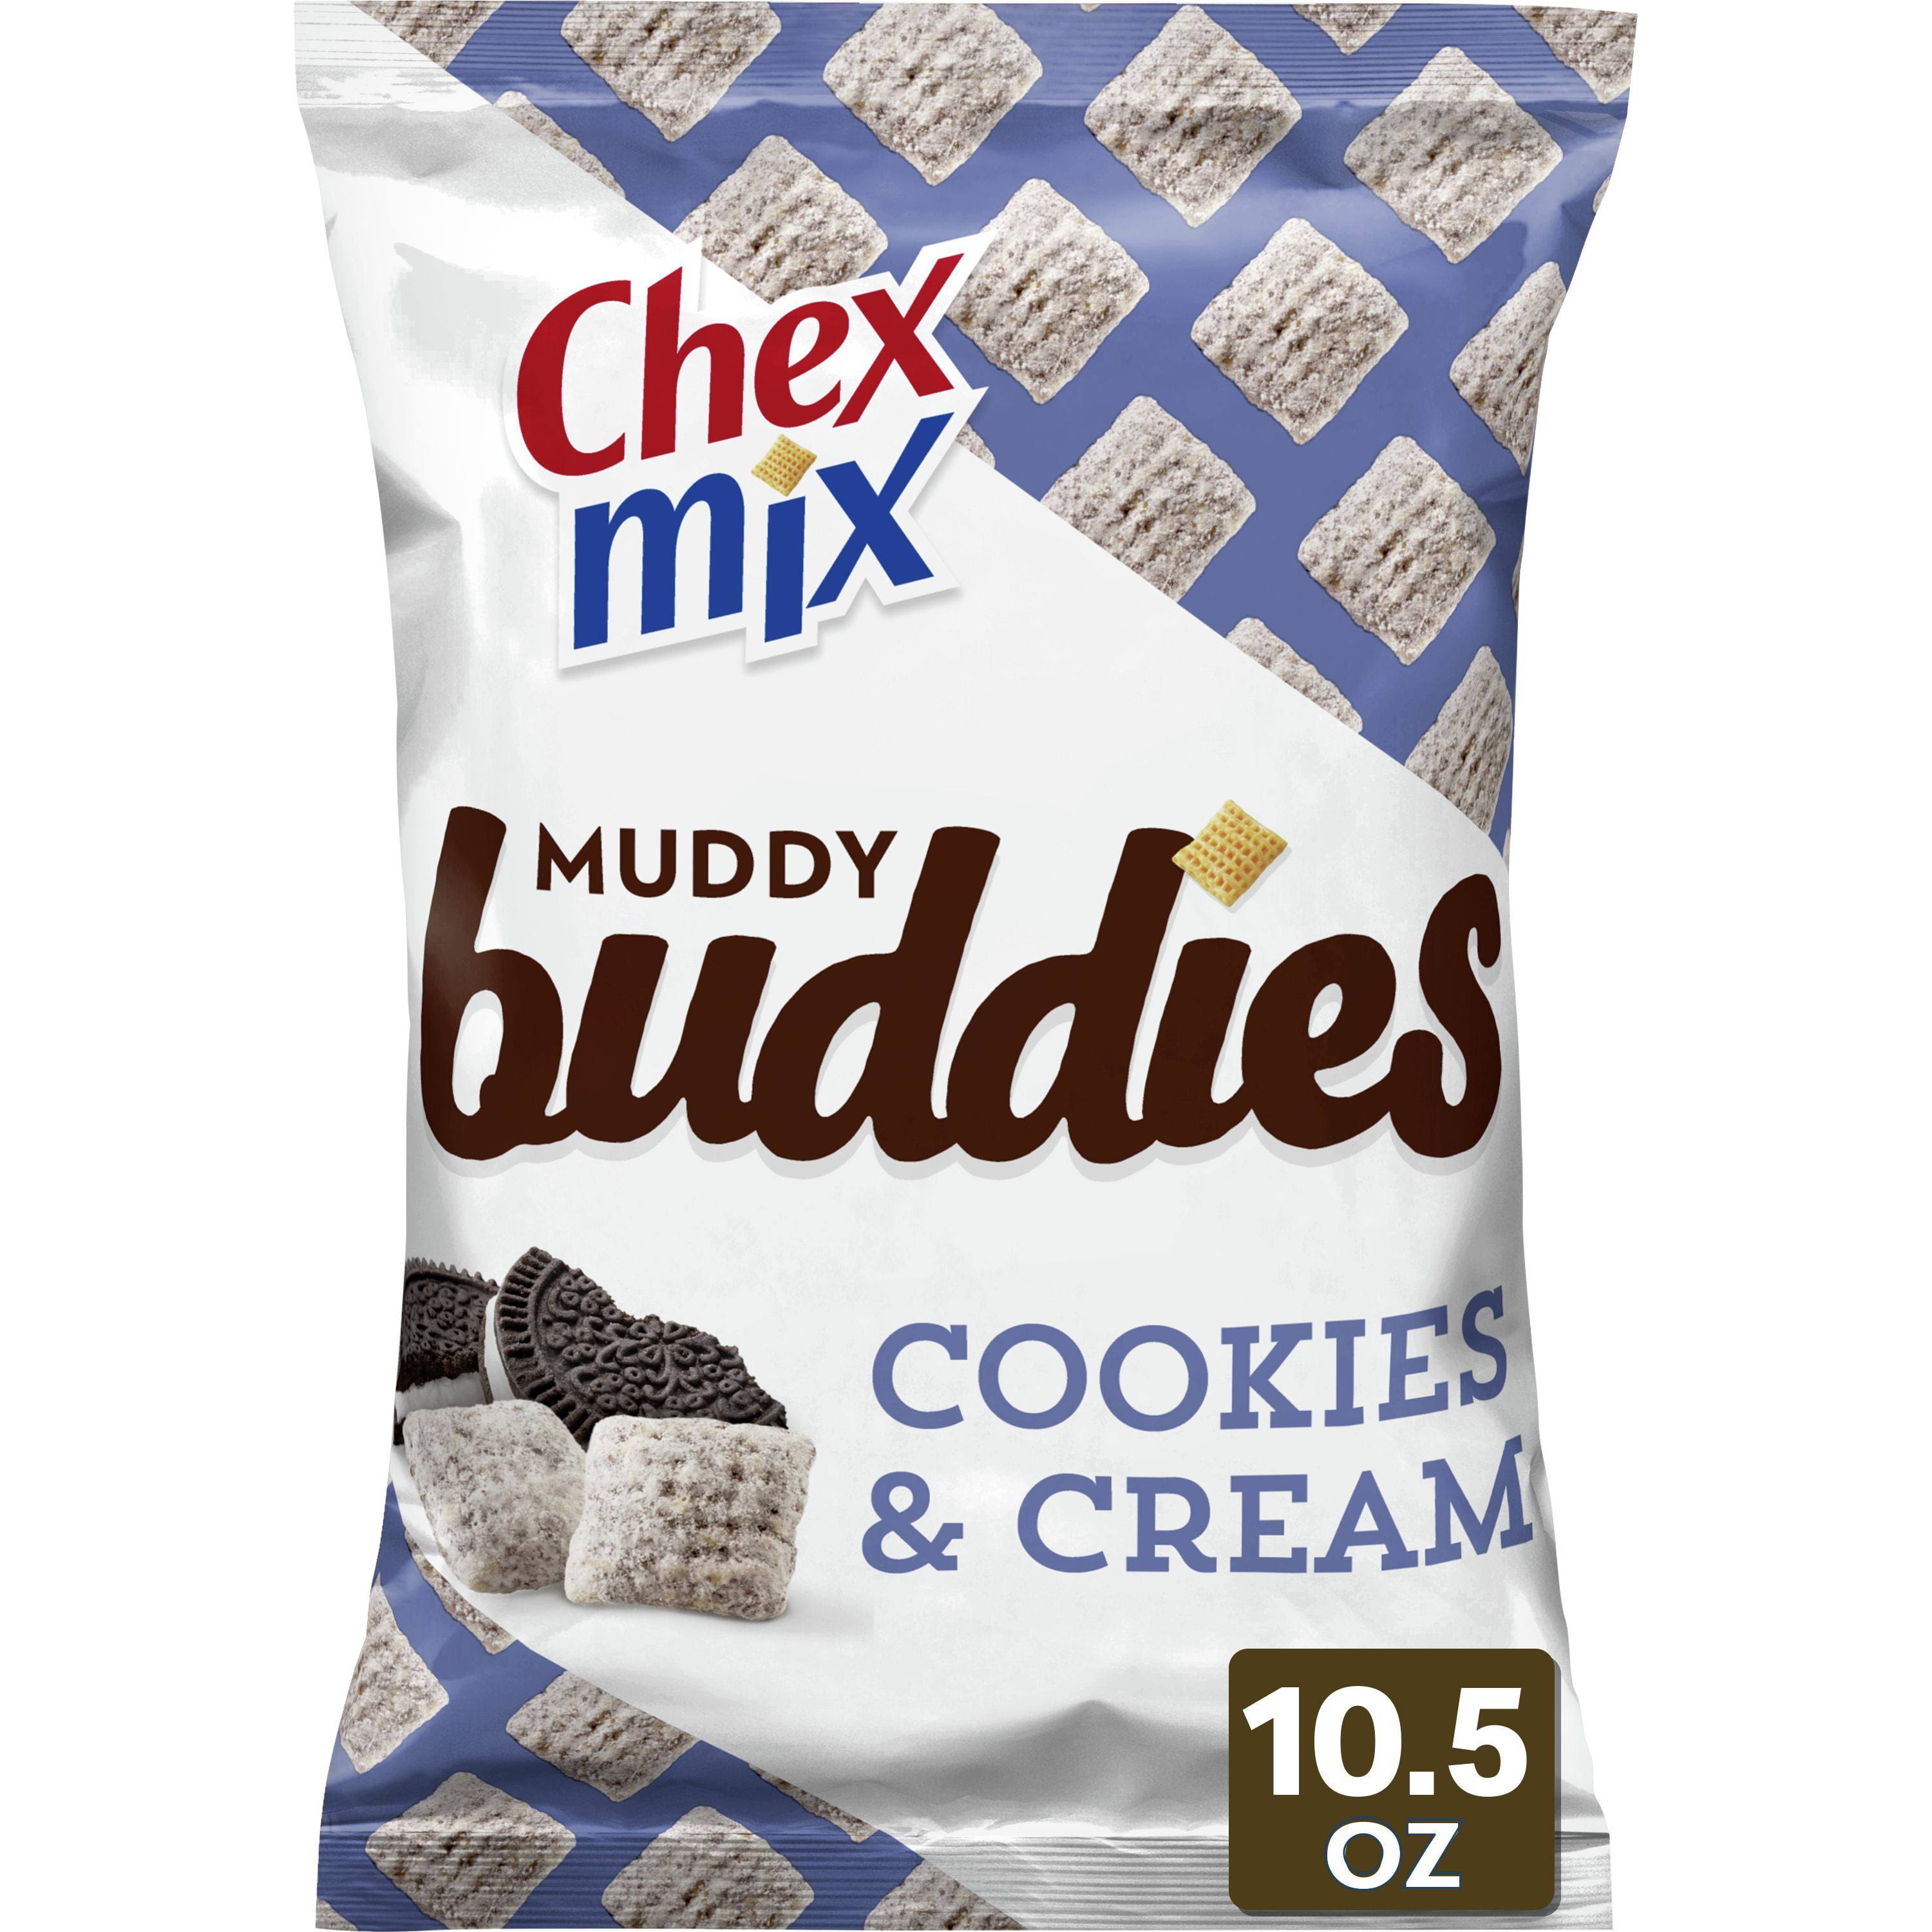 Chex Mix Muddy Buddies Cookies and Cream Snack Mix, 10.5 oz